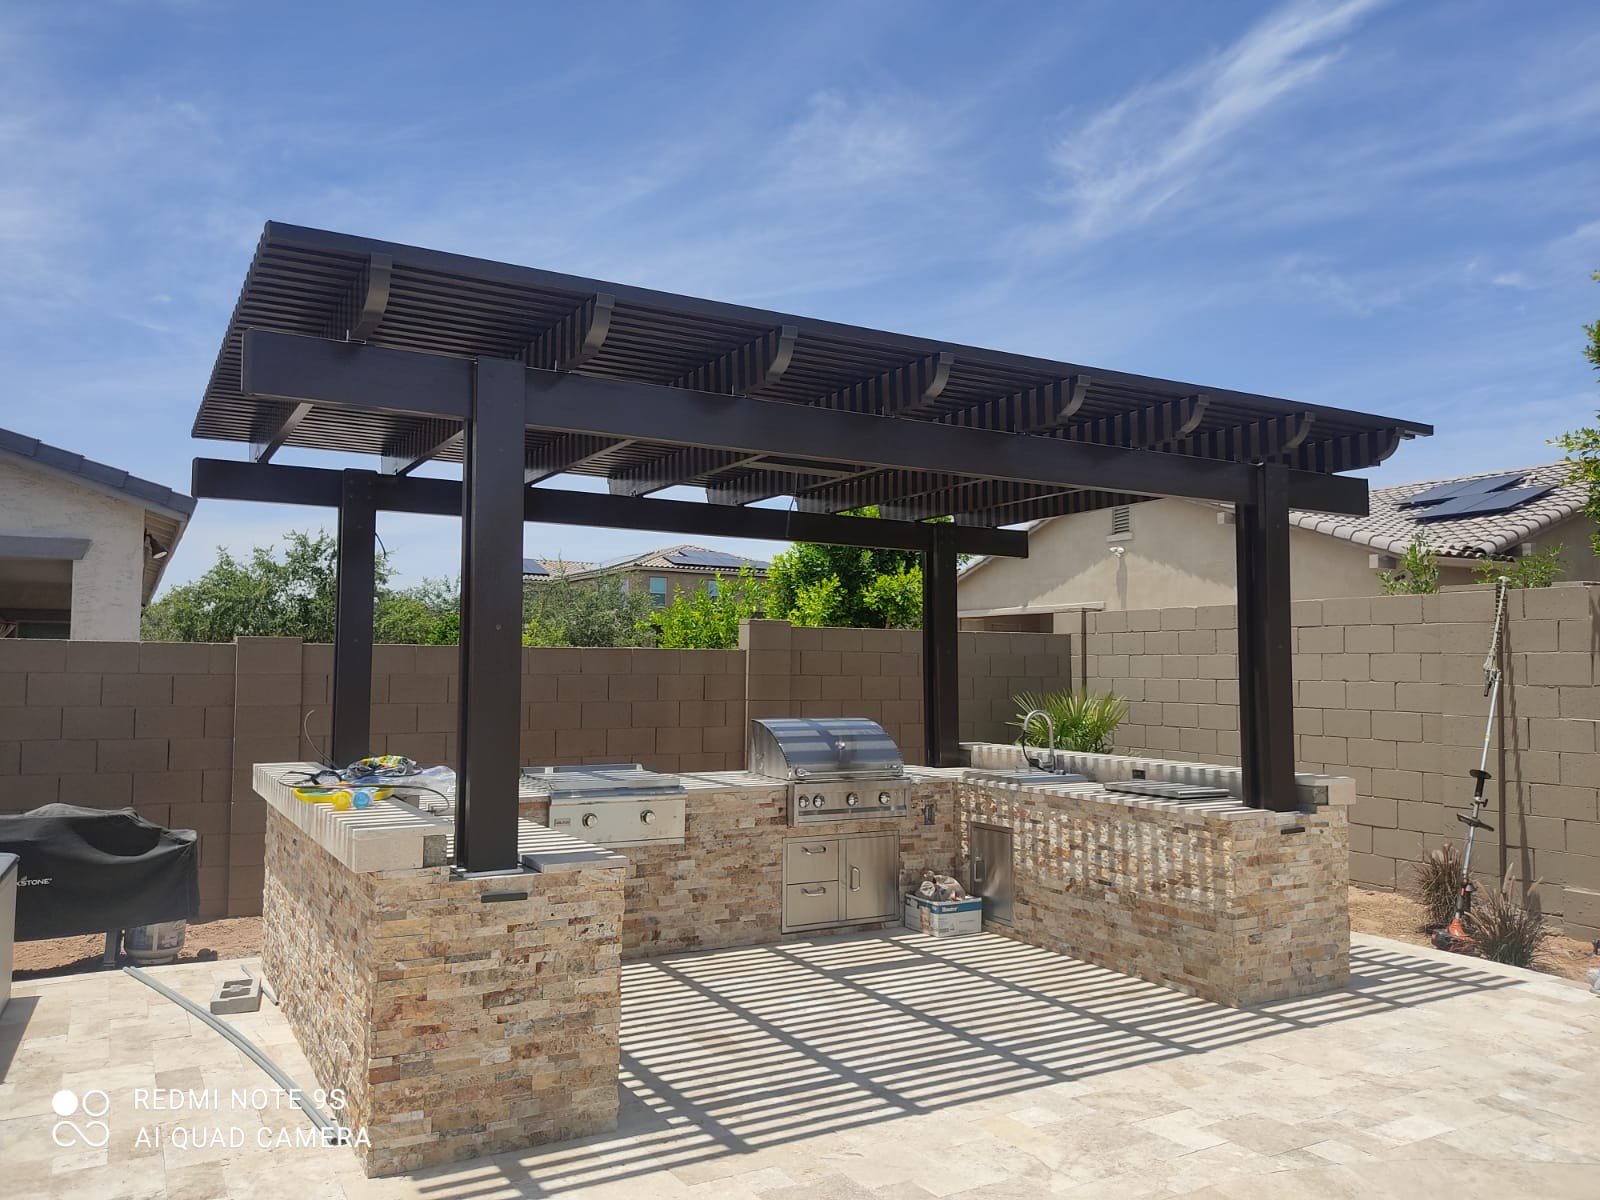 Lattice Patio Cover Installation Services near Phoenix AZ by Outshine Patio Cover